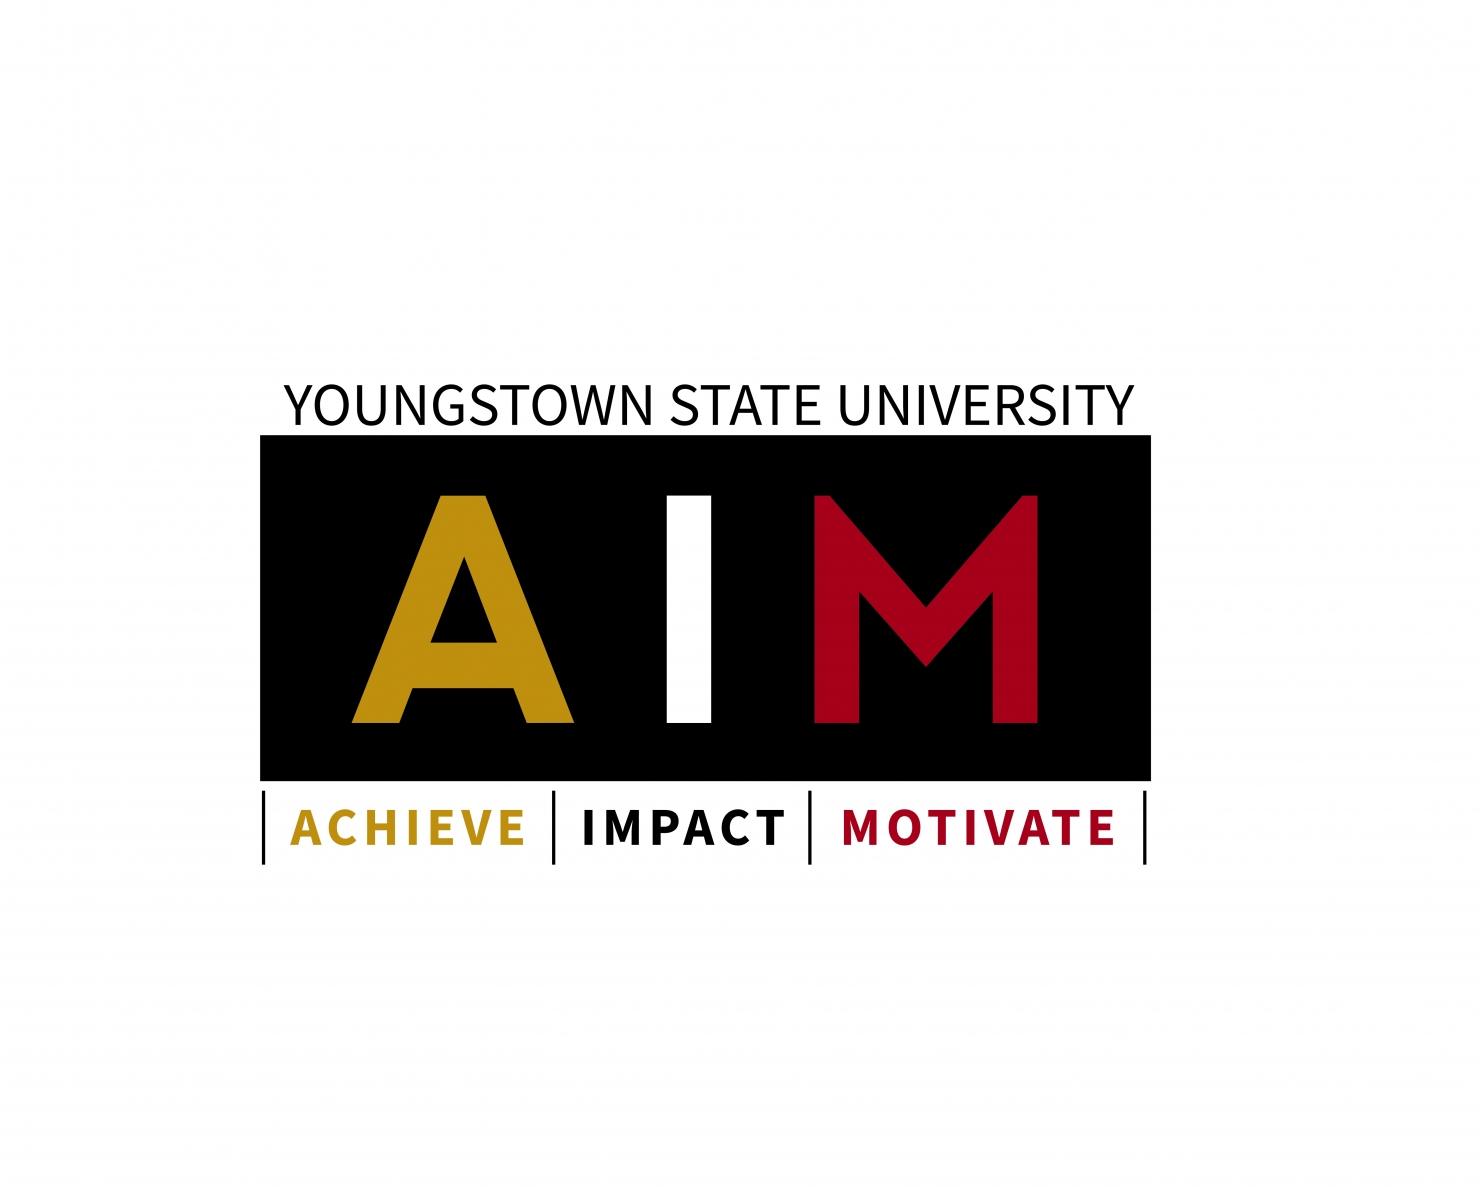 AIM logo, Achieve, Impact, Motivate